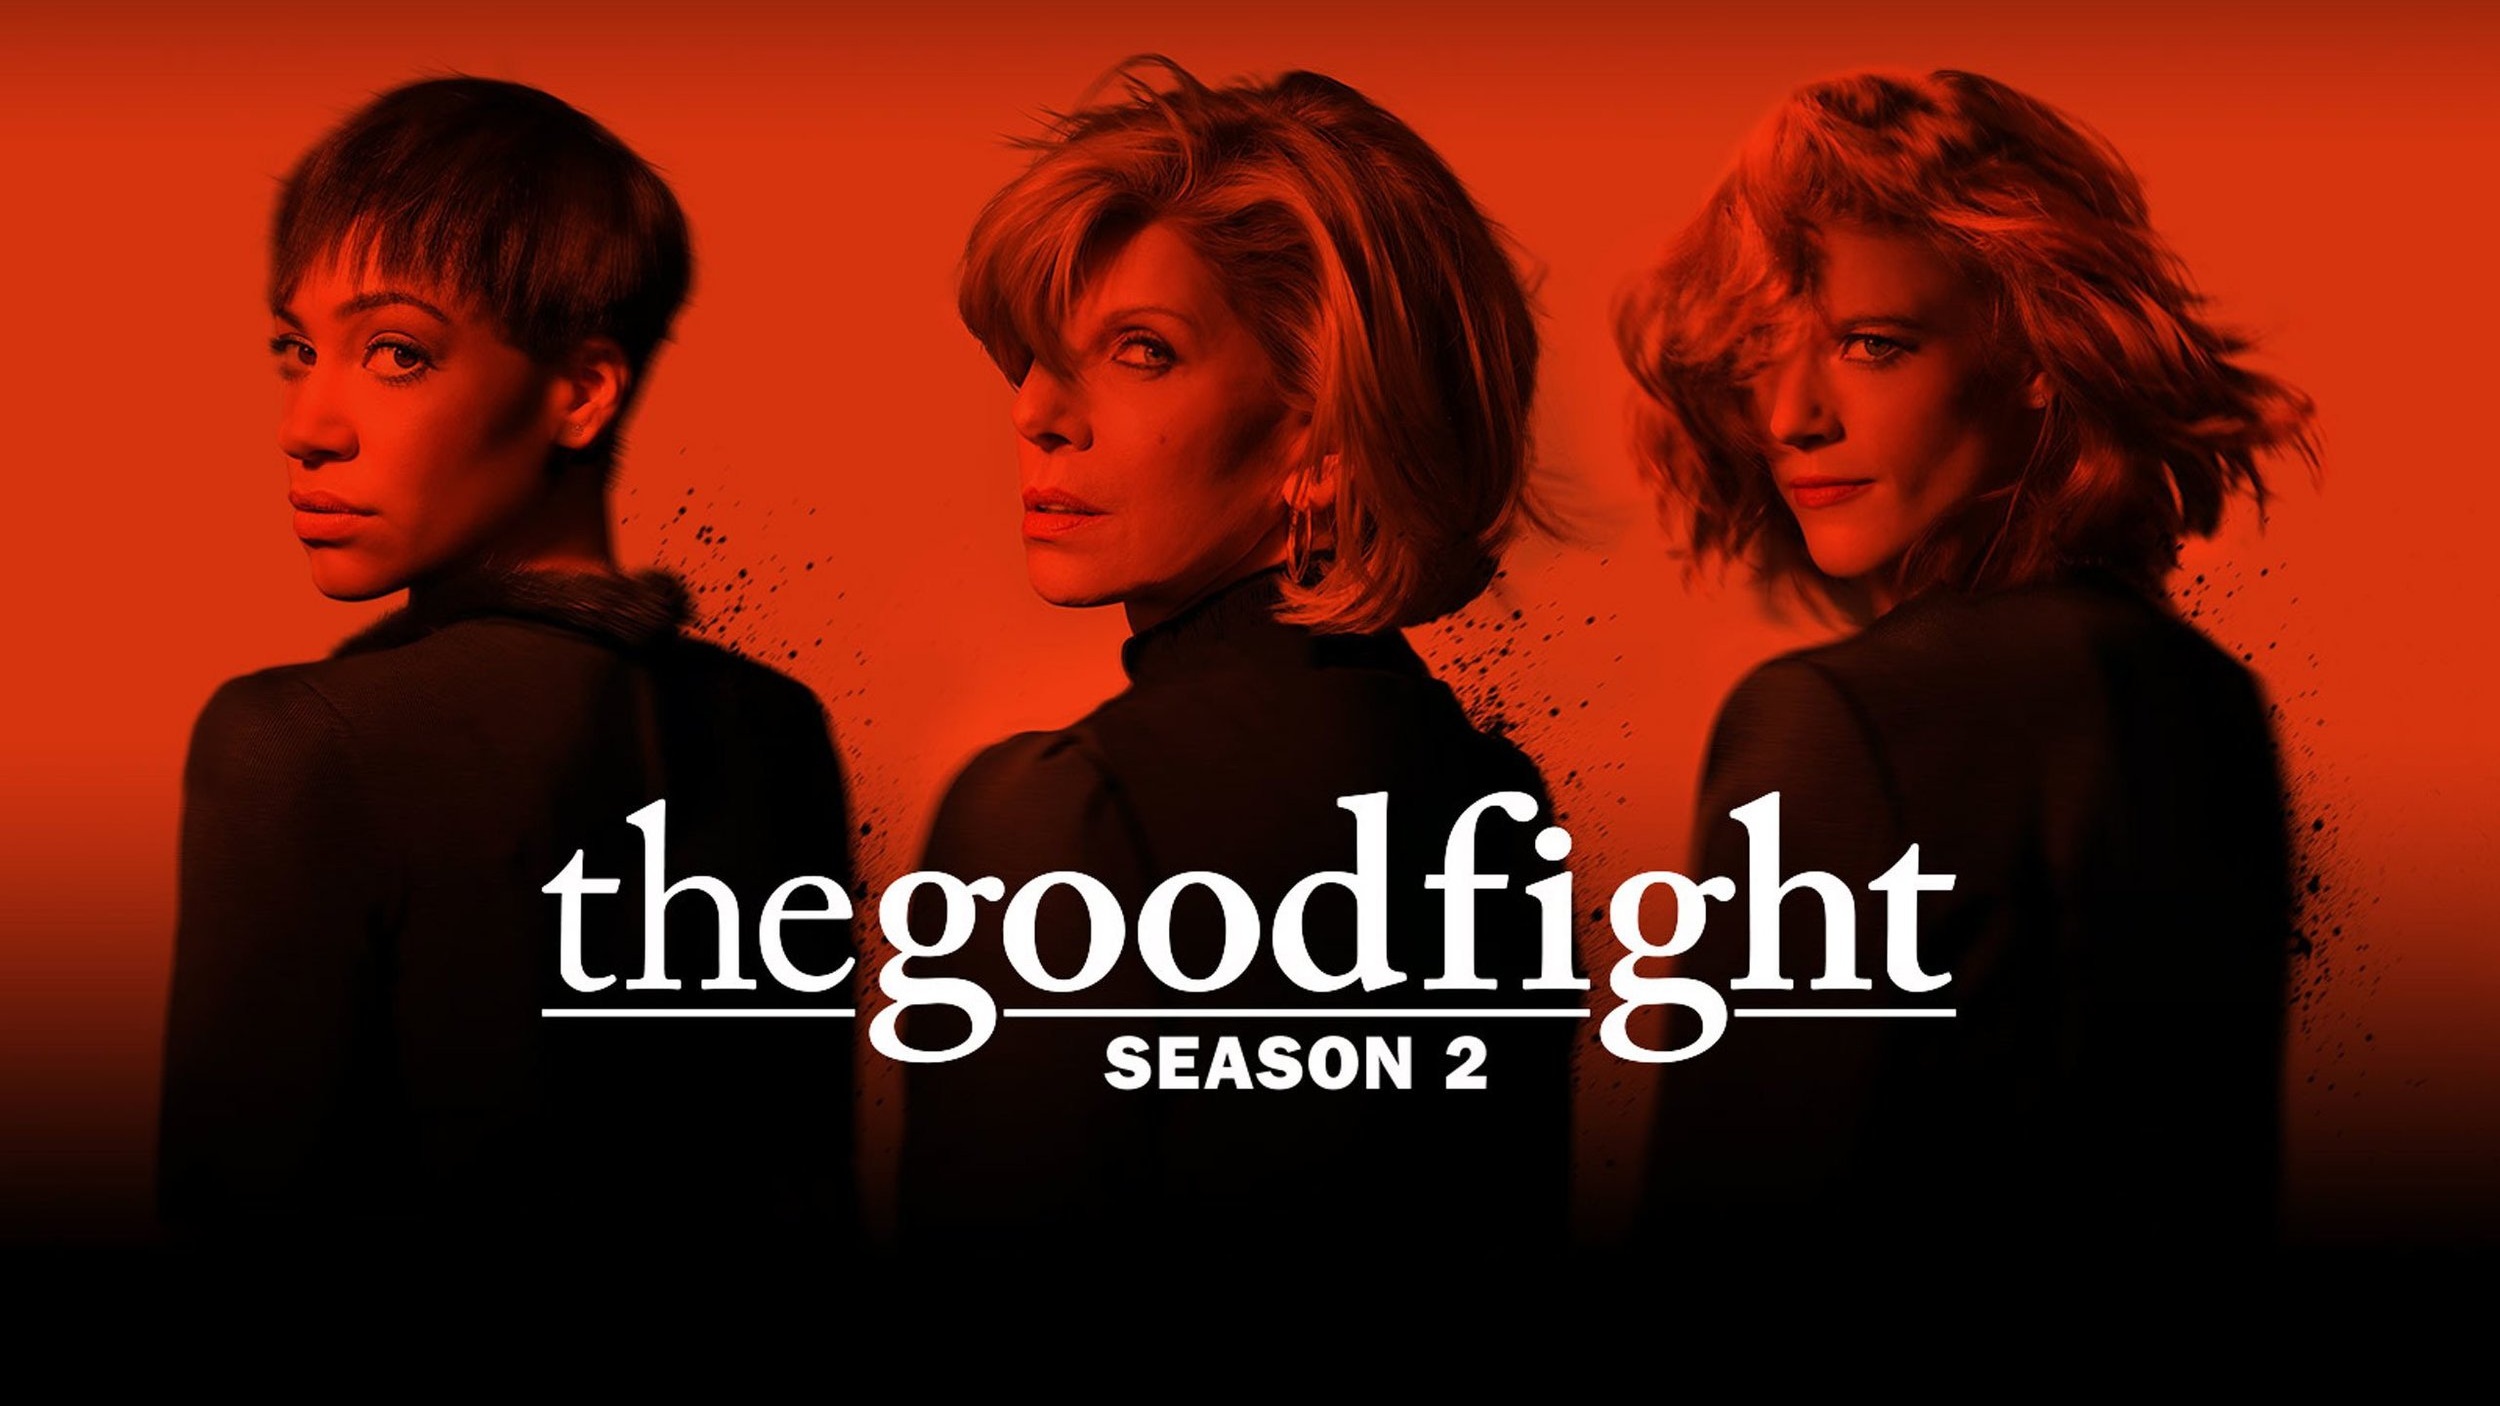   The Good Fight returns for season three  Image - SBS 